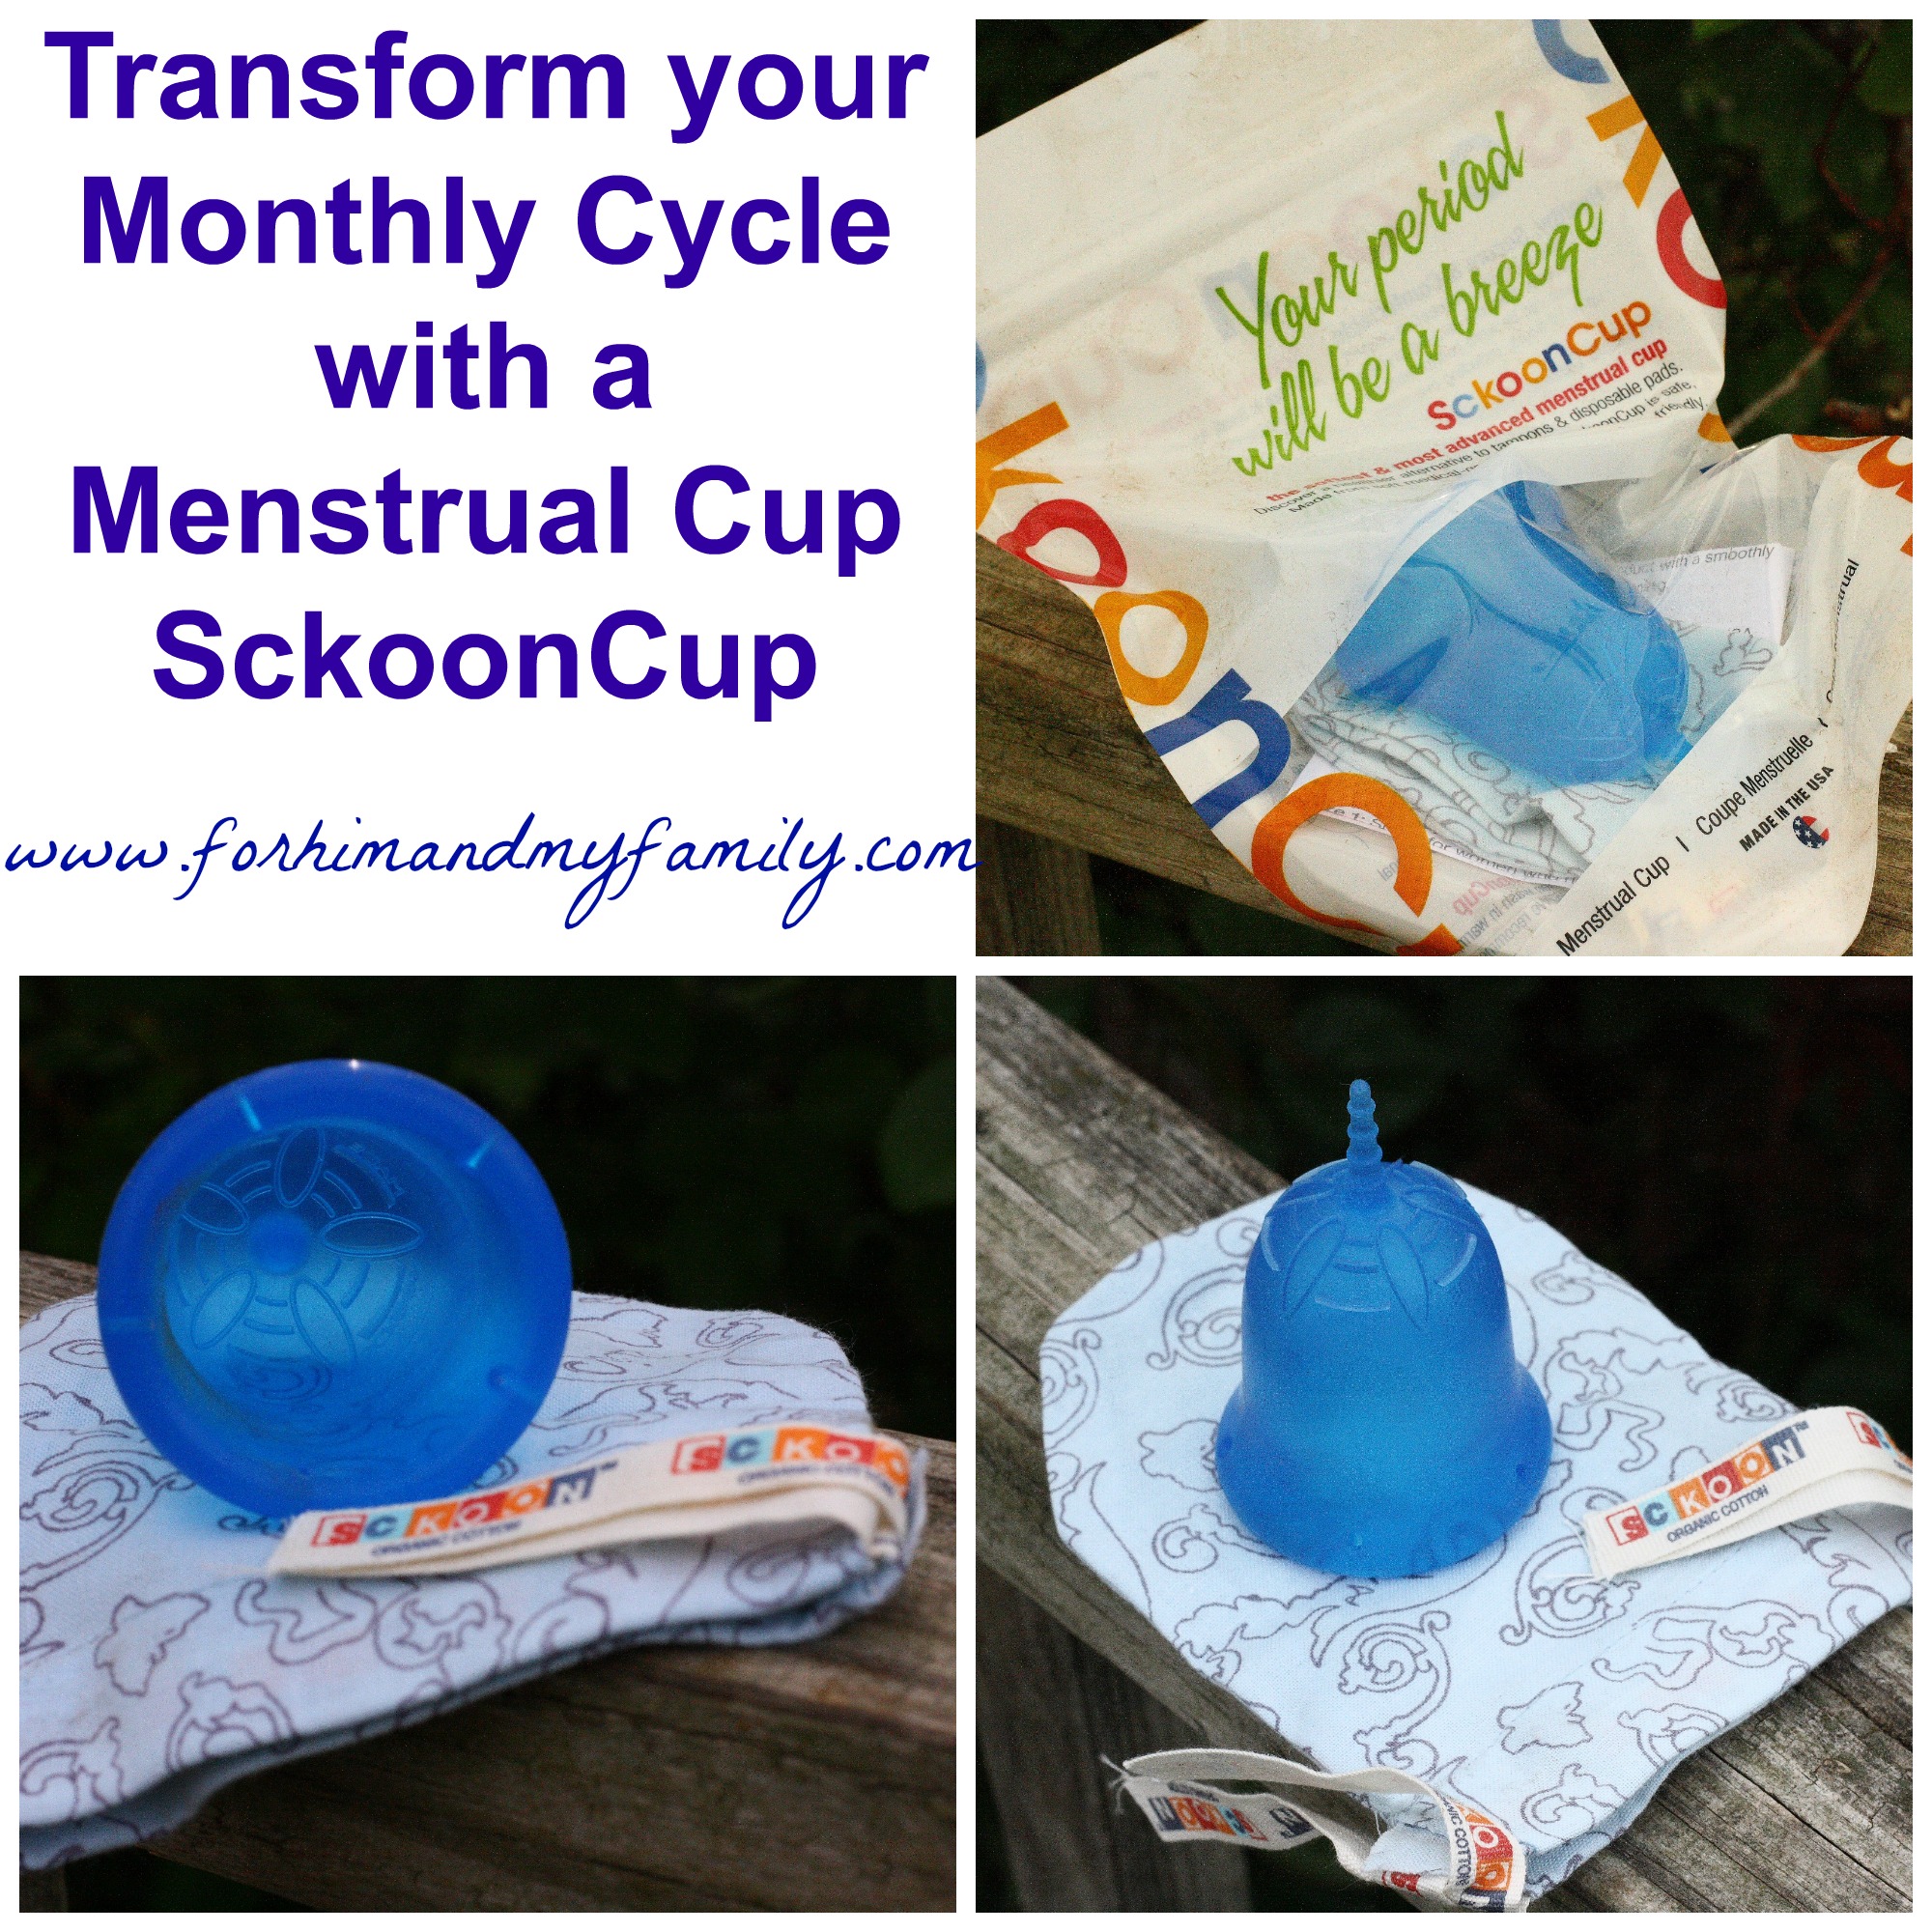 SckoonCup Menstrual Cup